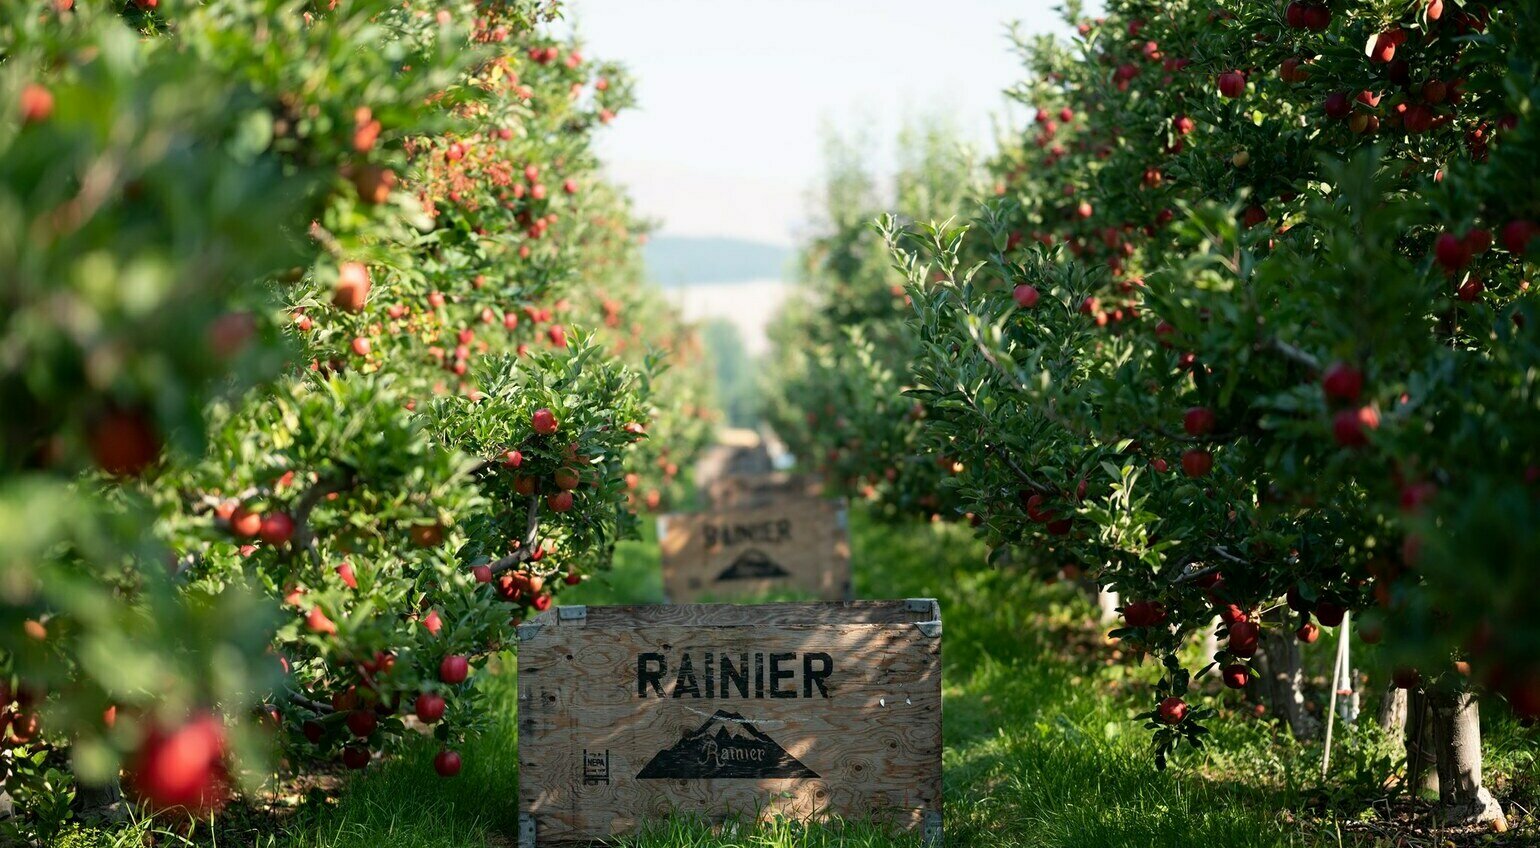 Rainier Fruit Co